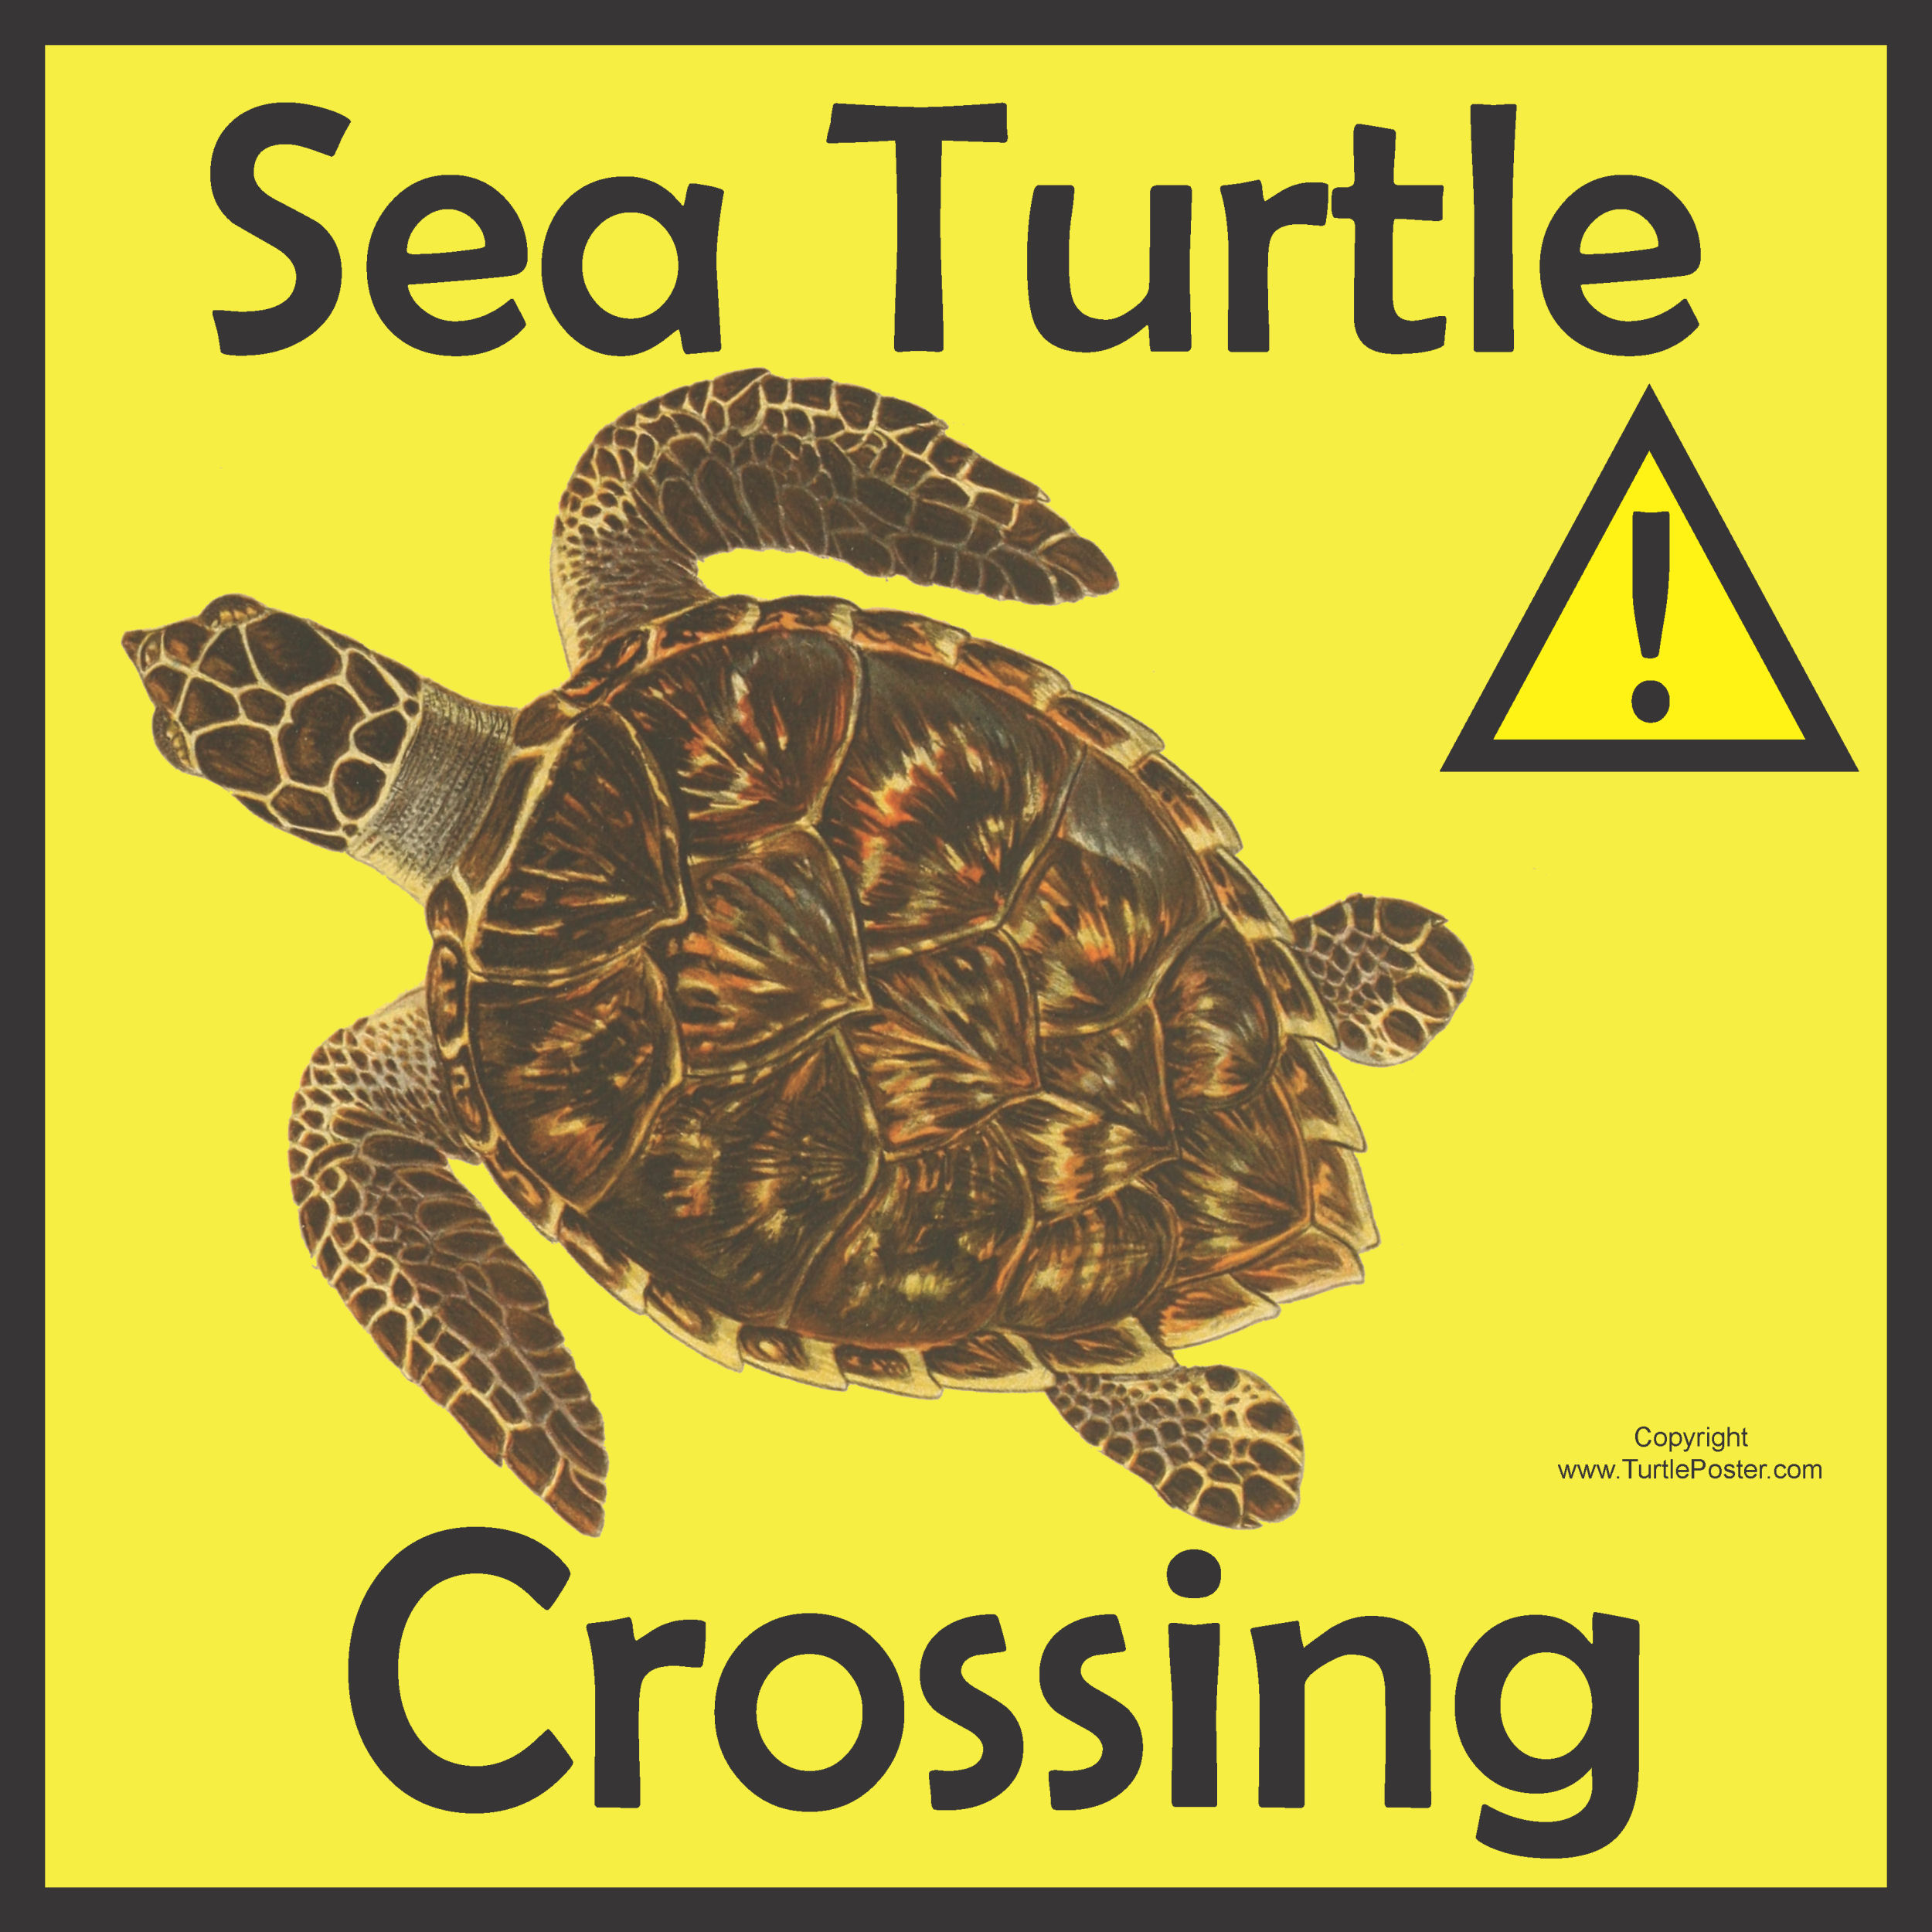 Sea Turtle Crossing Sign